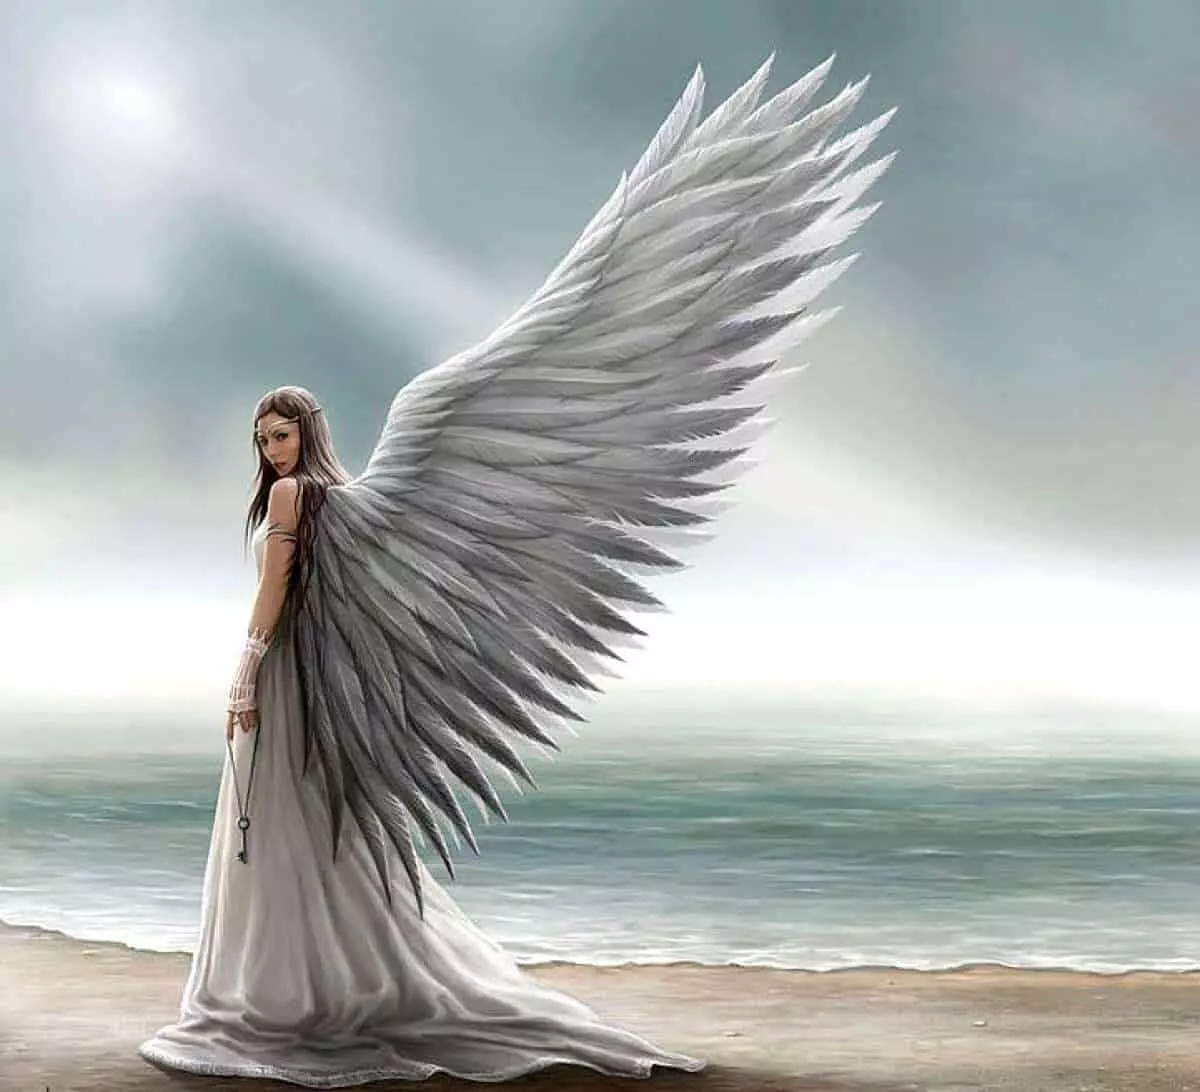 سلنا - فرشته نور در فال